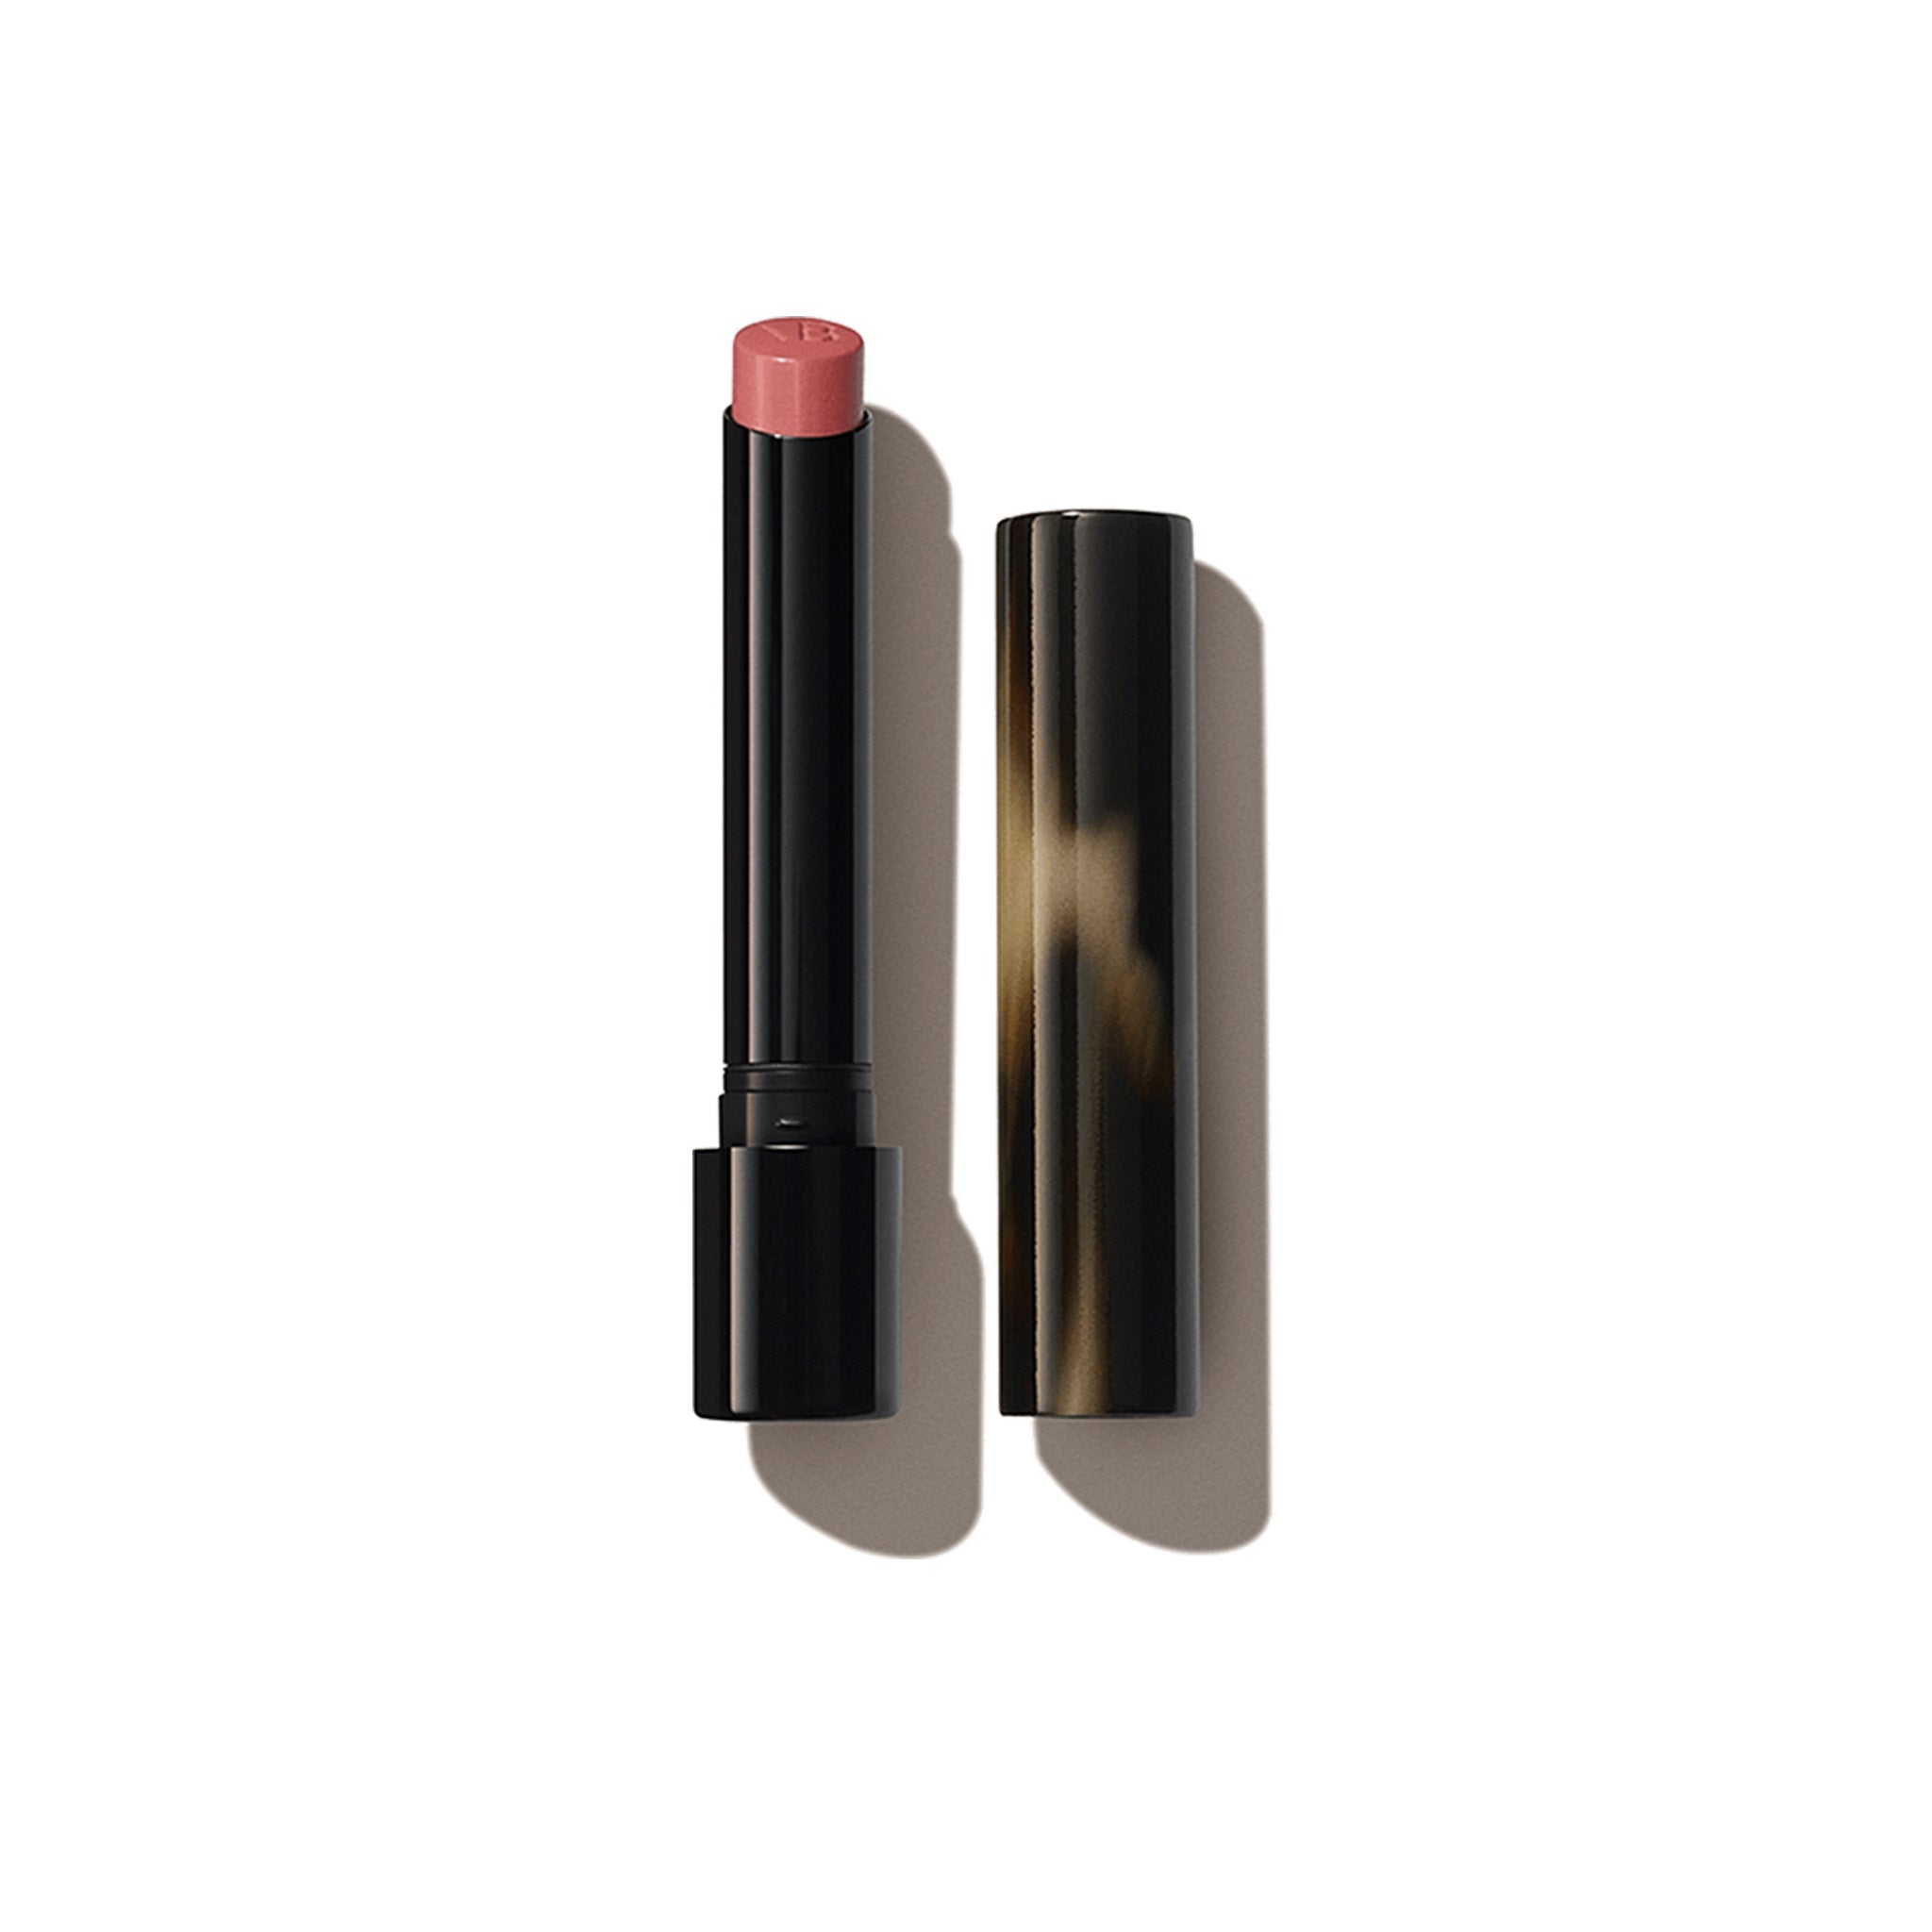 Victoria Beckham Beauty Posh Lipstick - Pout